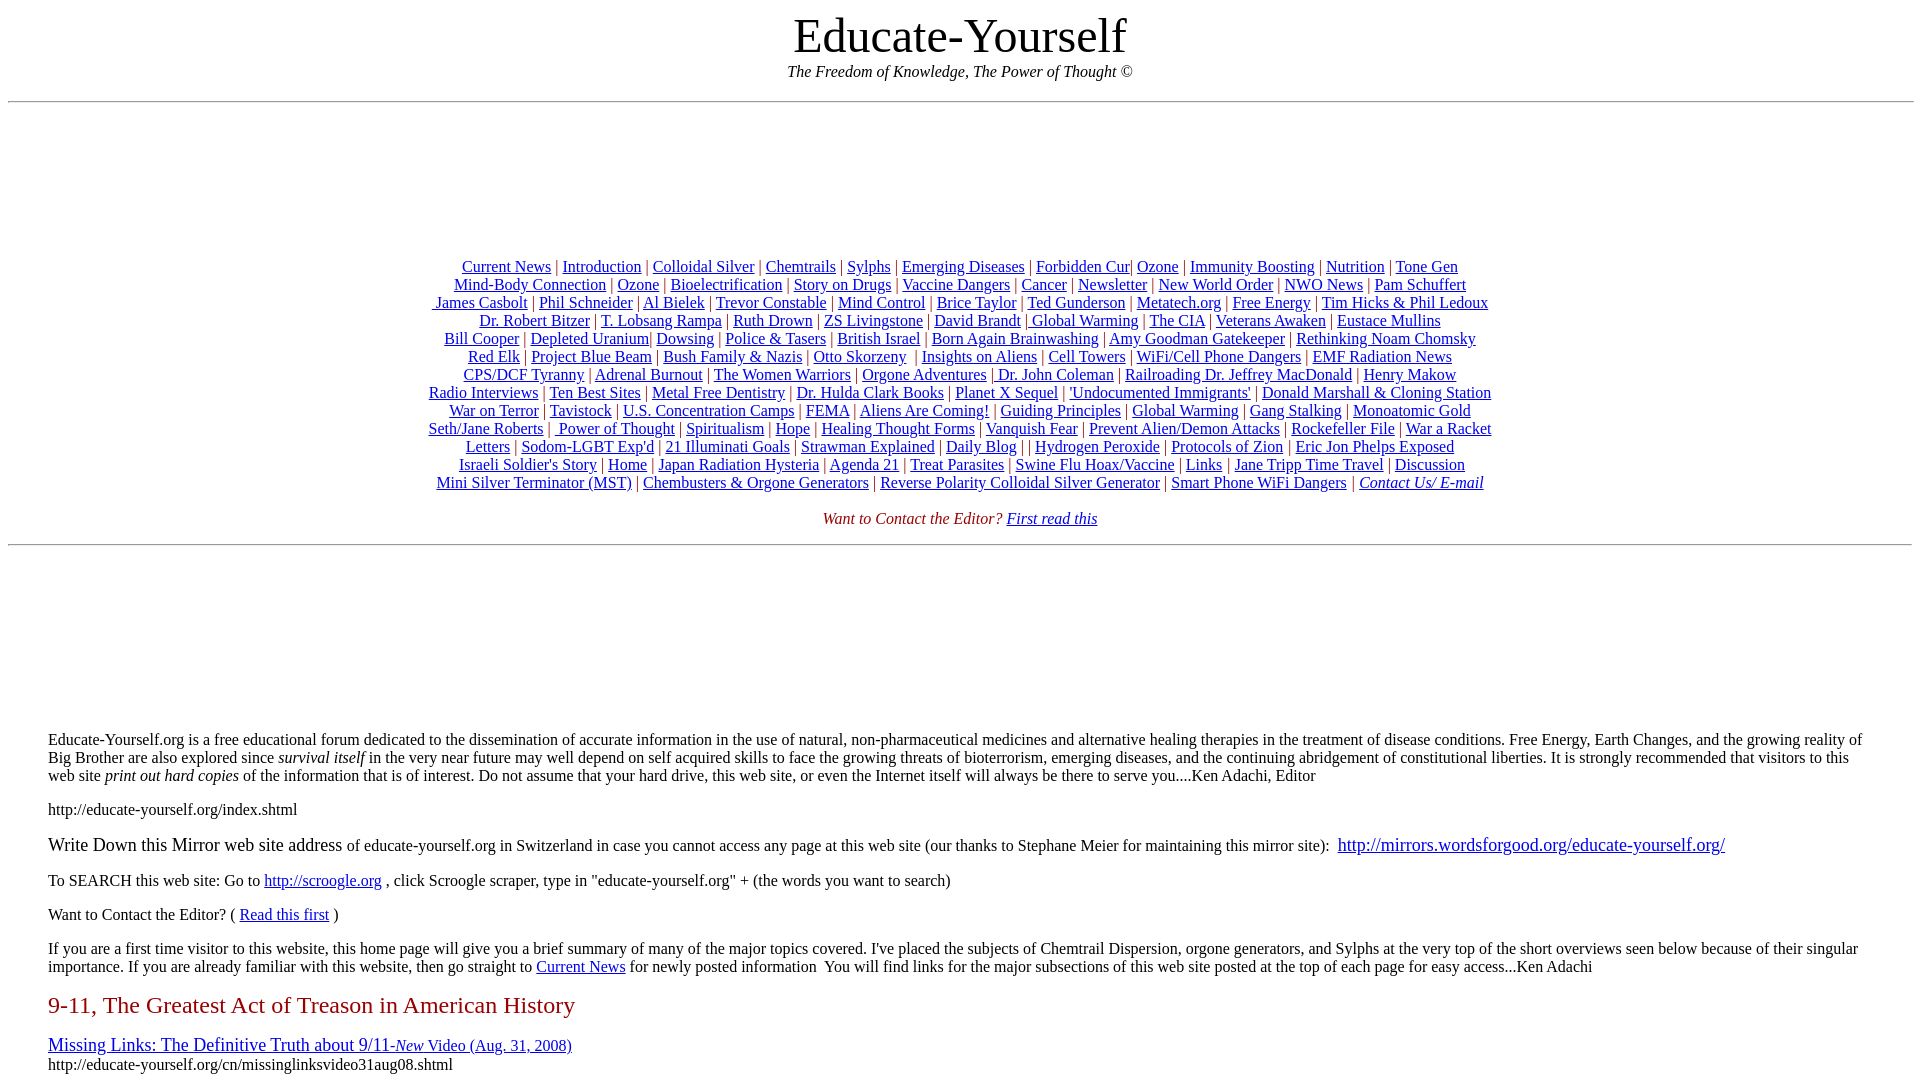 Website status educate-yourself.org is   ONLINE